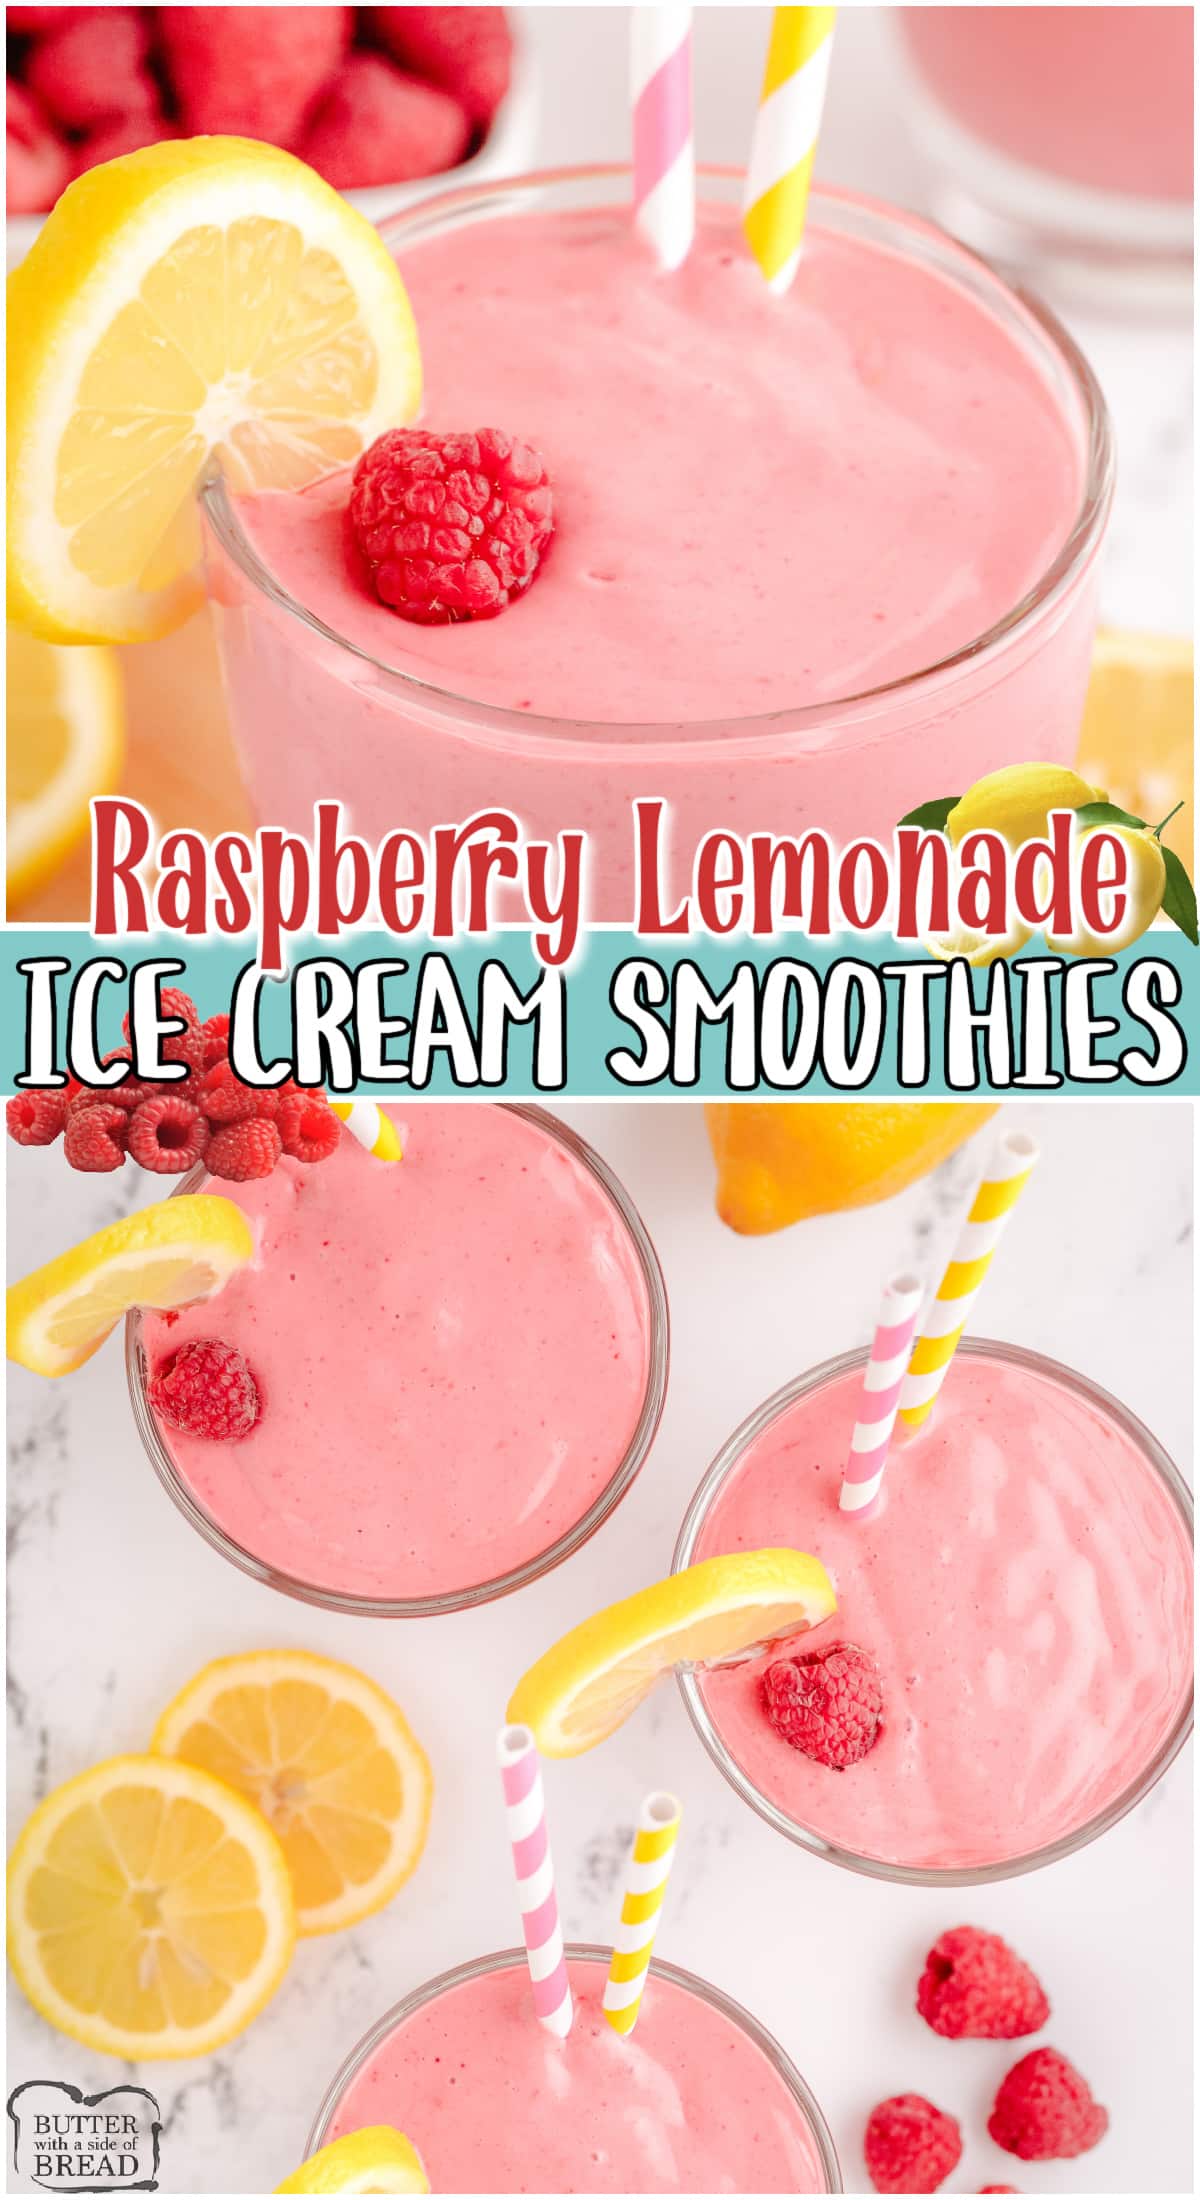 Raspberry Lemonade Ice Cream Smoothies are refreshing drinks made with raspberry lemonade concentrate, half & half, frozen raspberries & vanilla ice cream!